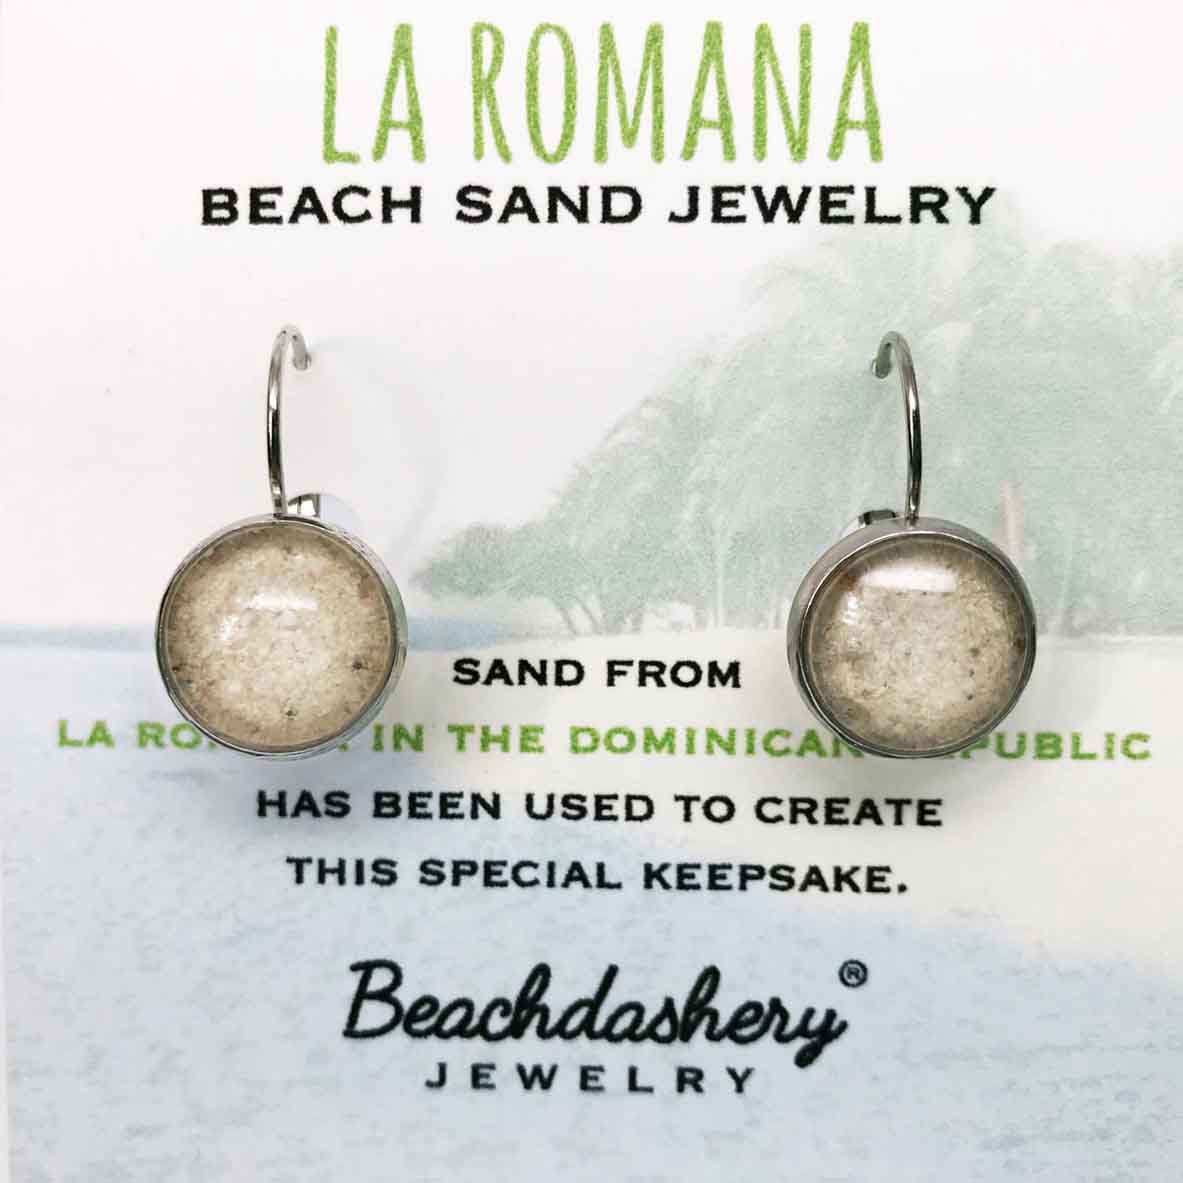 La Romana Dominican Republic Sand Jewelry Beachdashery® Jewelry